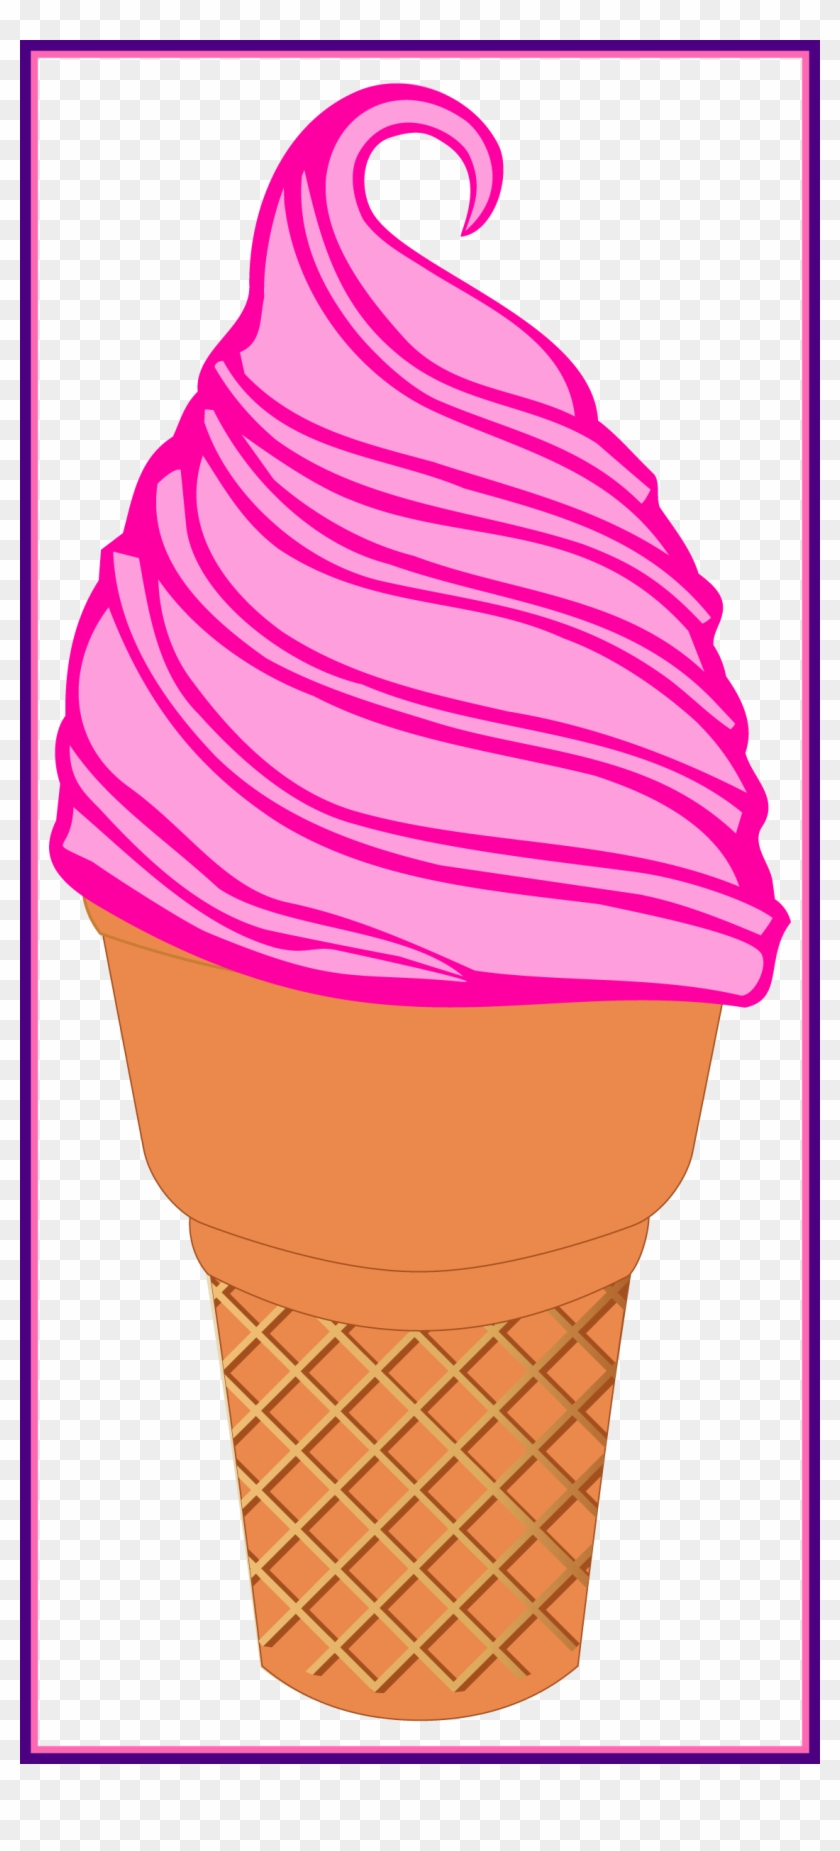 10 Ice Cream Clipart Nº2 - Ice Cream Cone No Background #225587